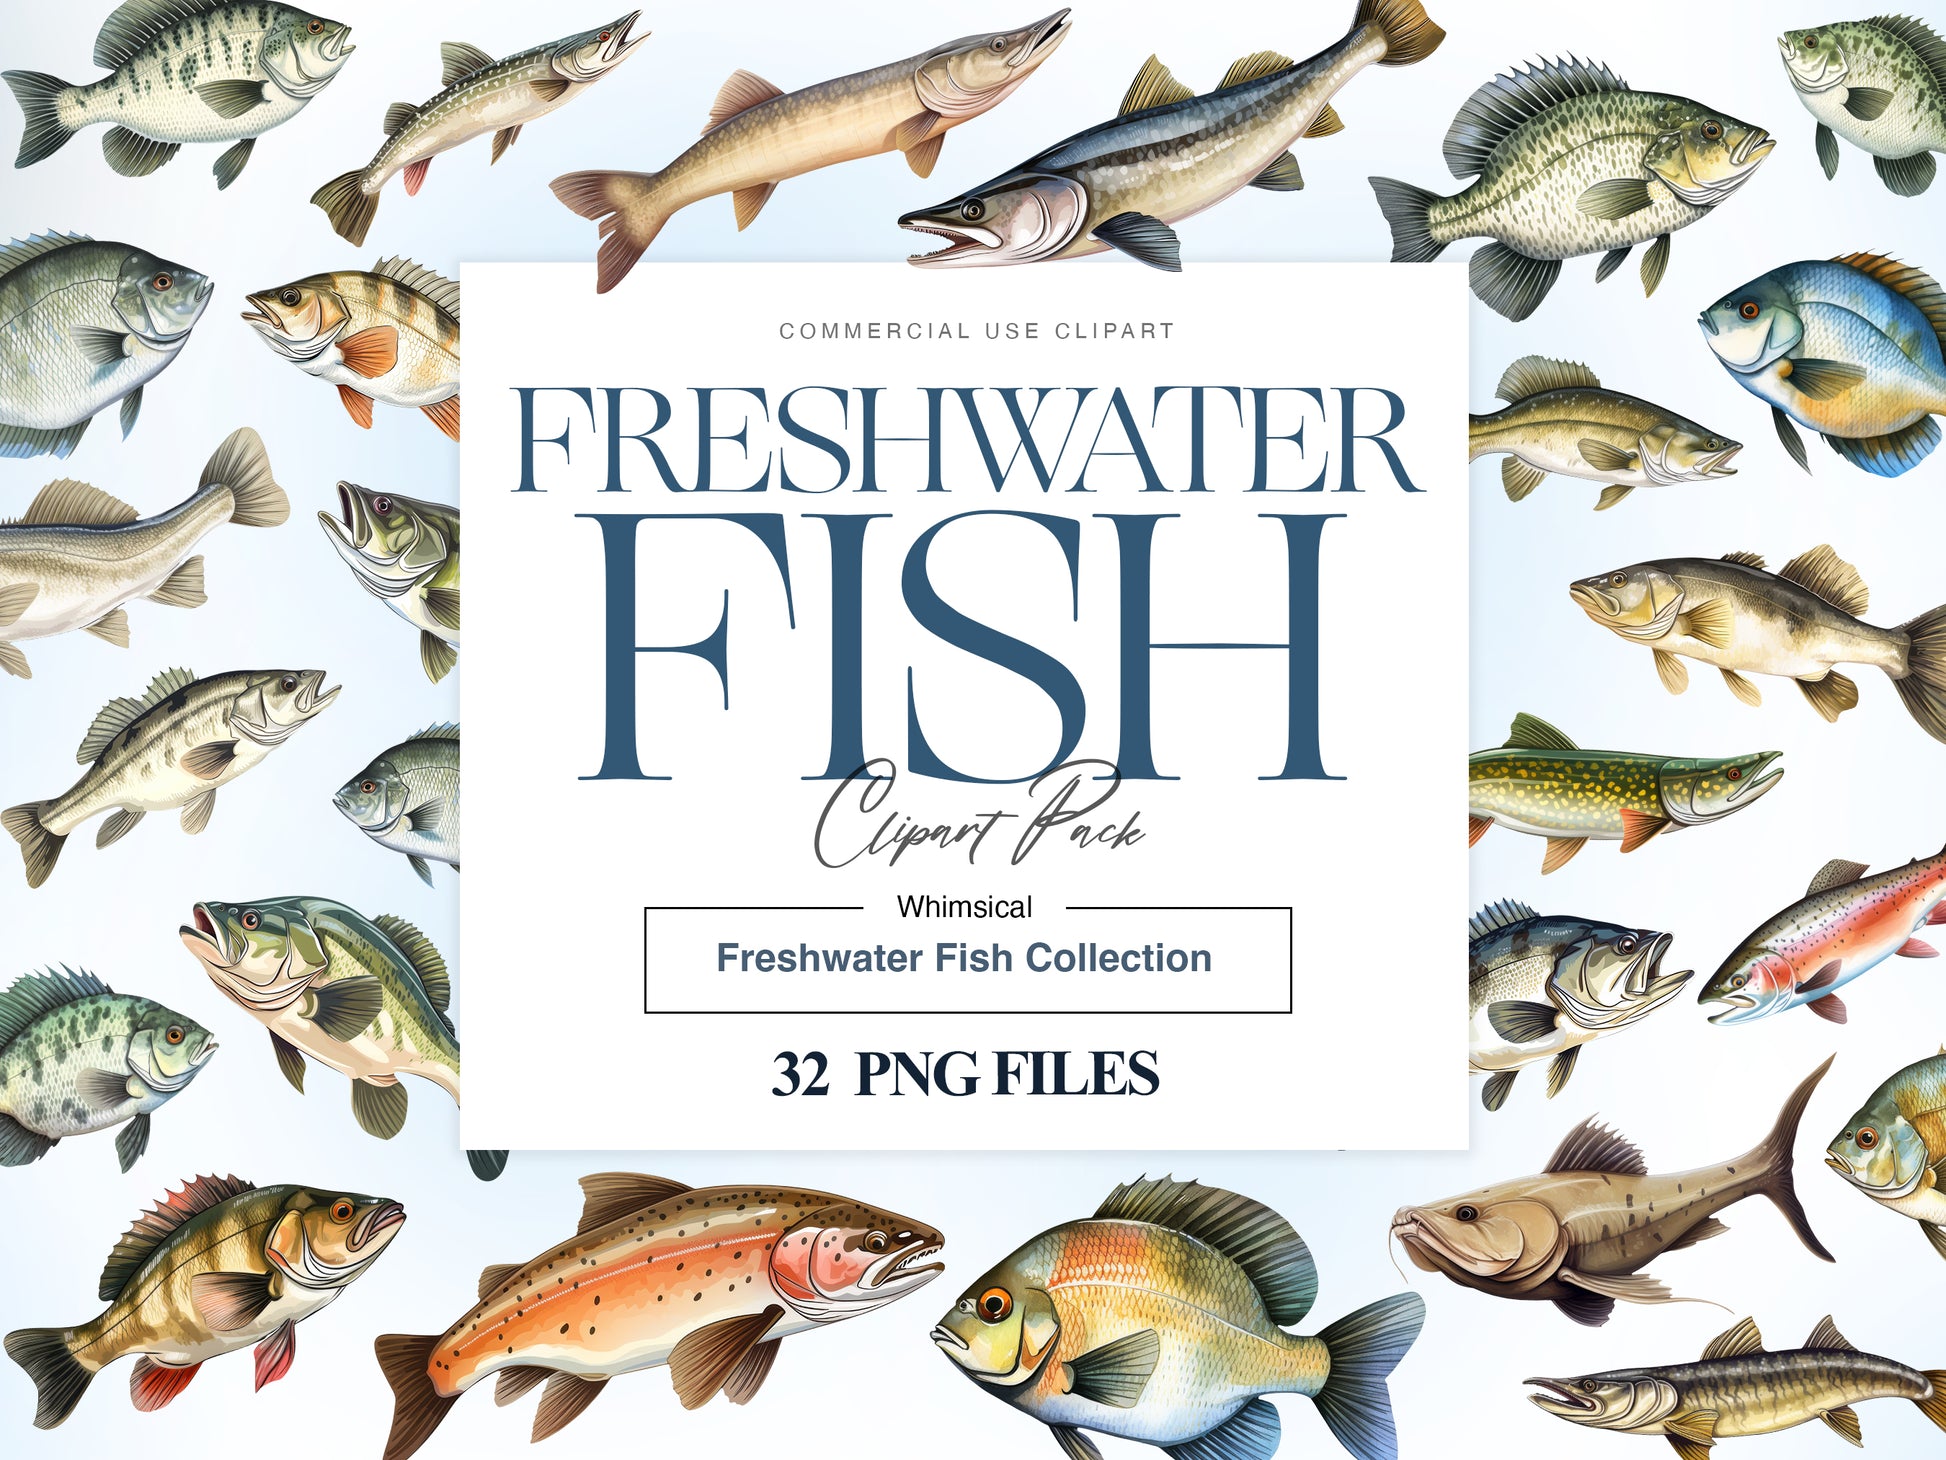 Freshwater Fish